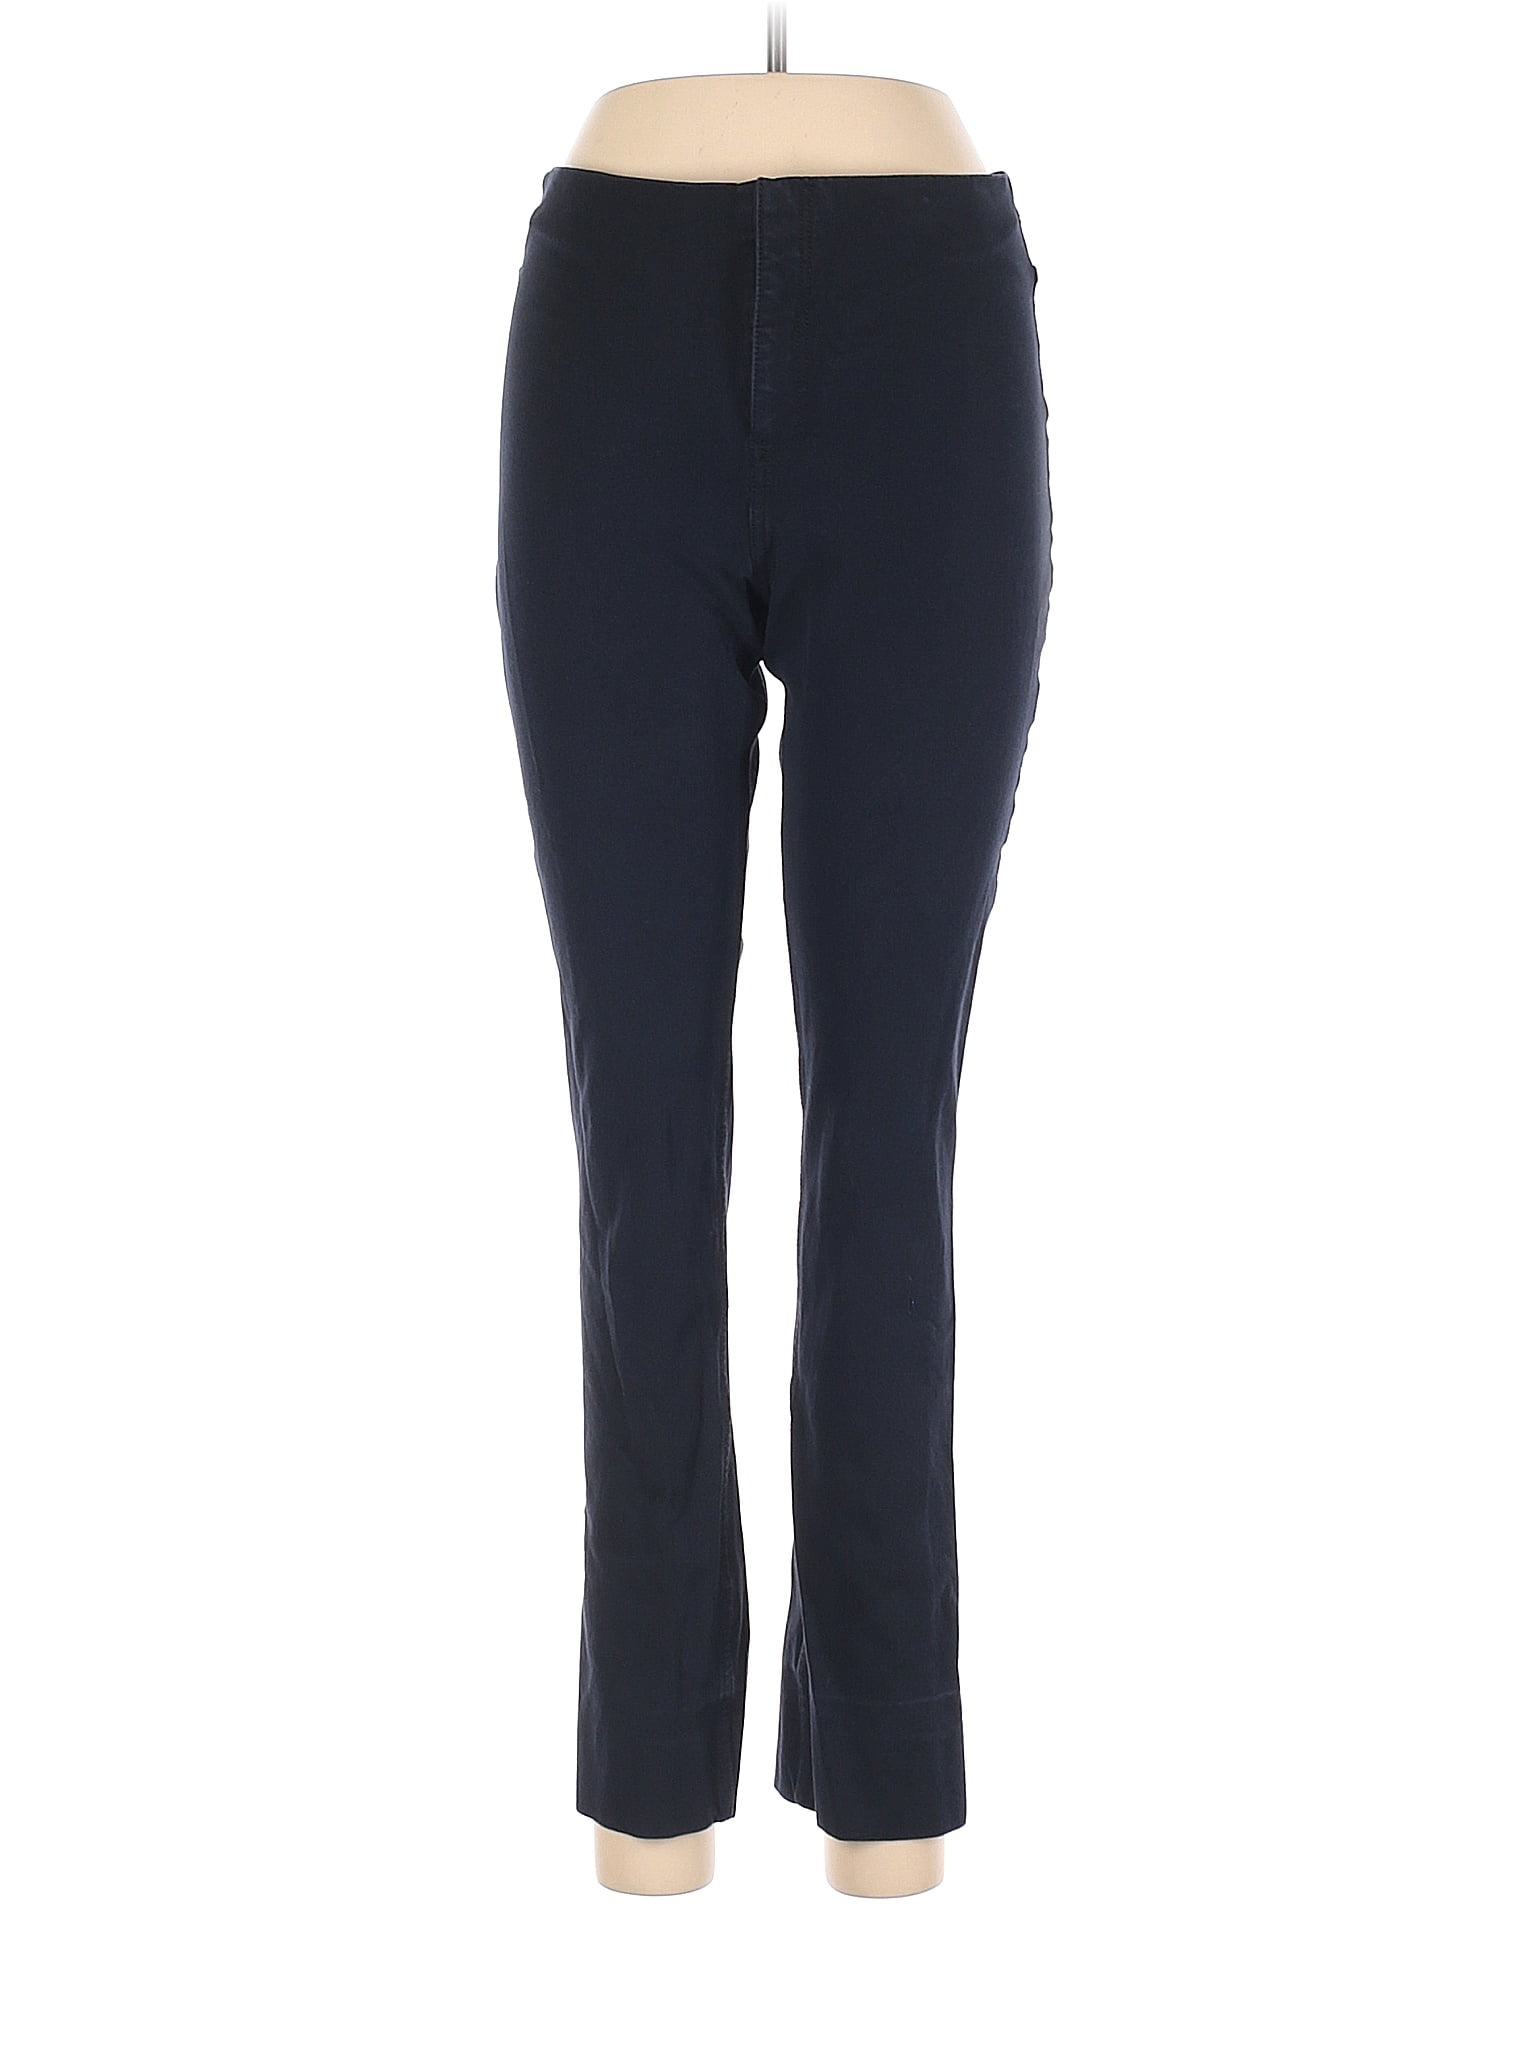 MM. LaFleur Polka Dots Black Casual Pants Size 6 - 74% off | thredUP